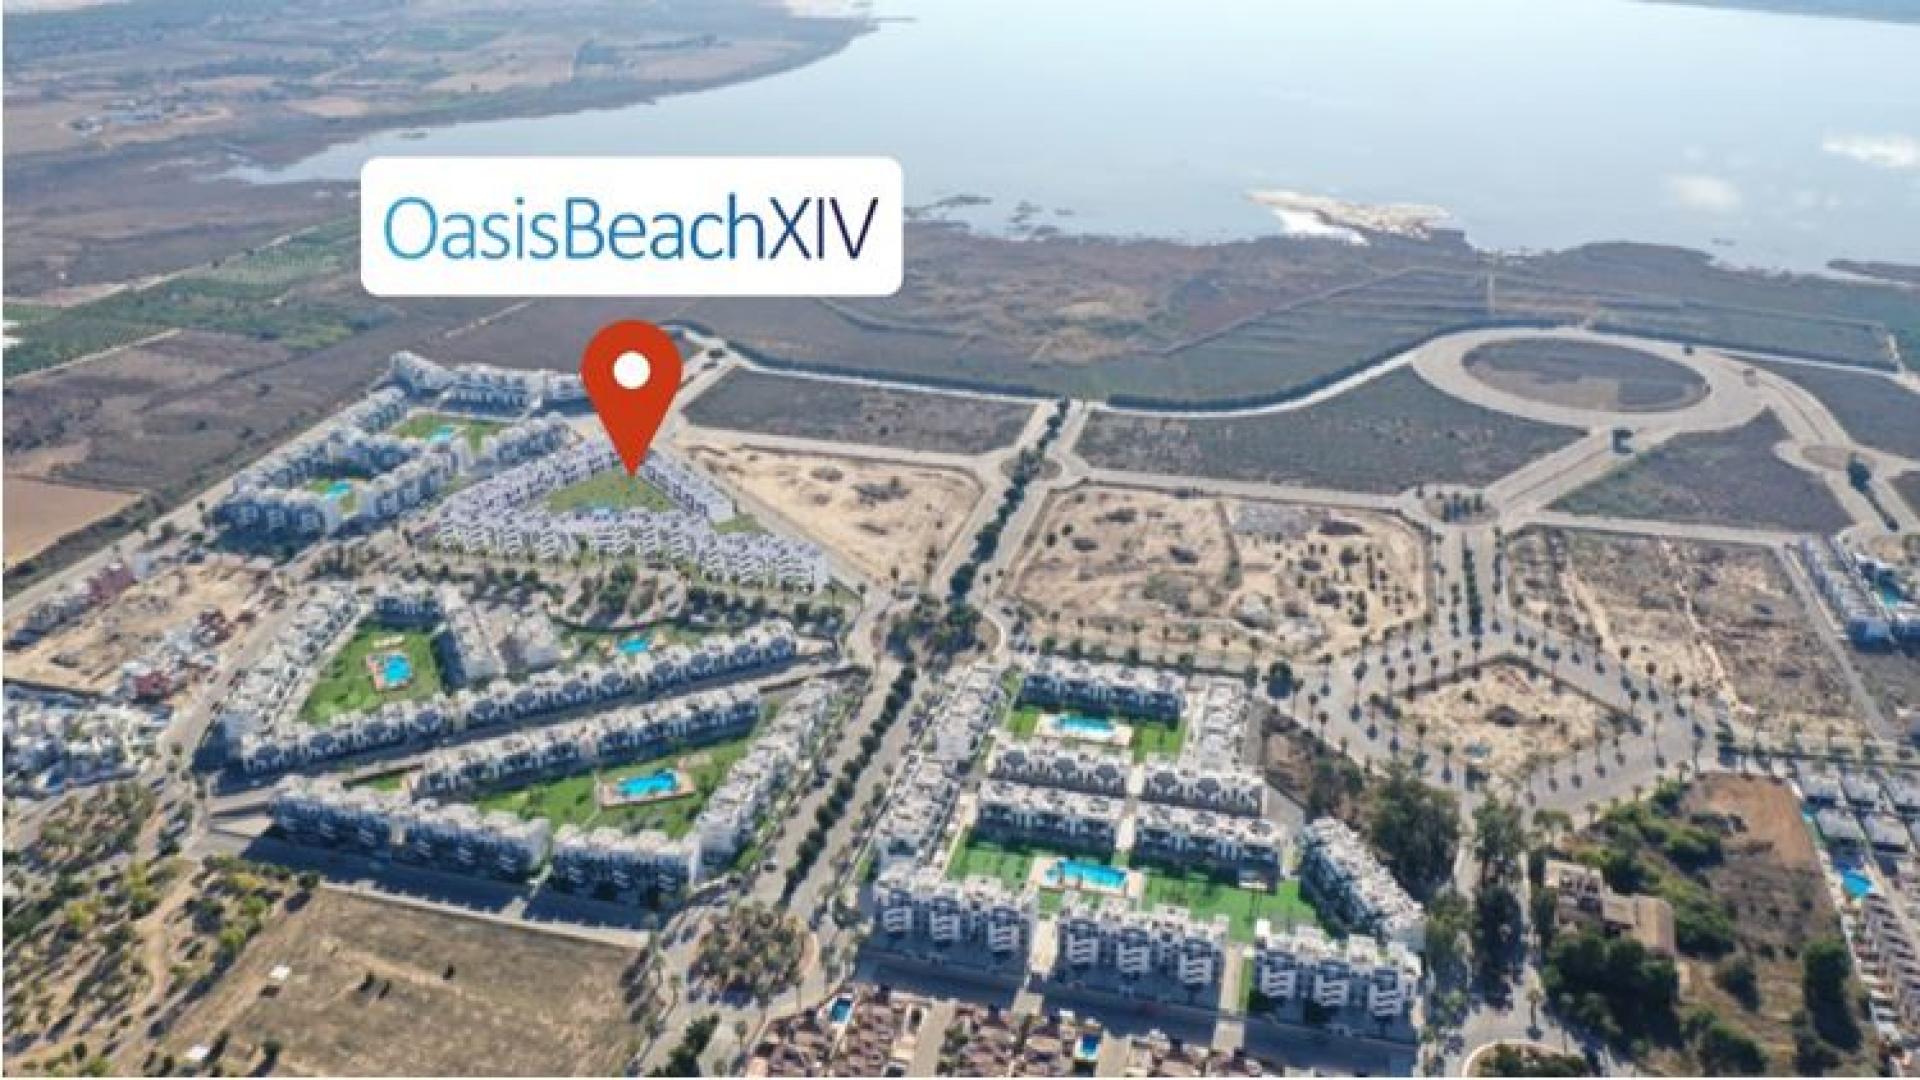 Oasis Beach XIV